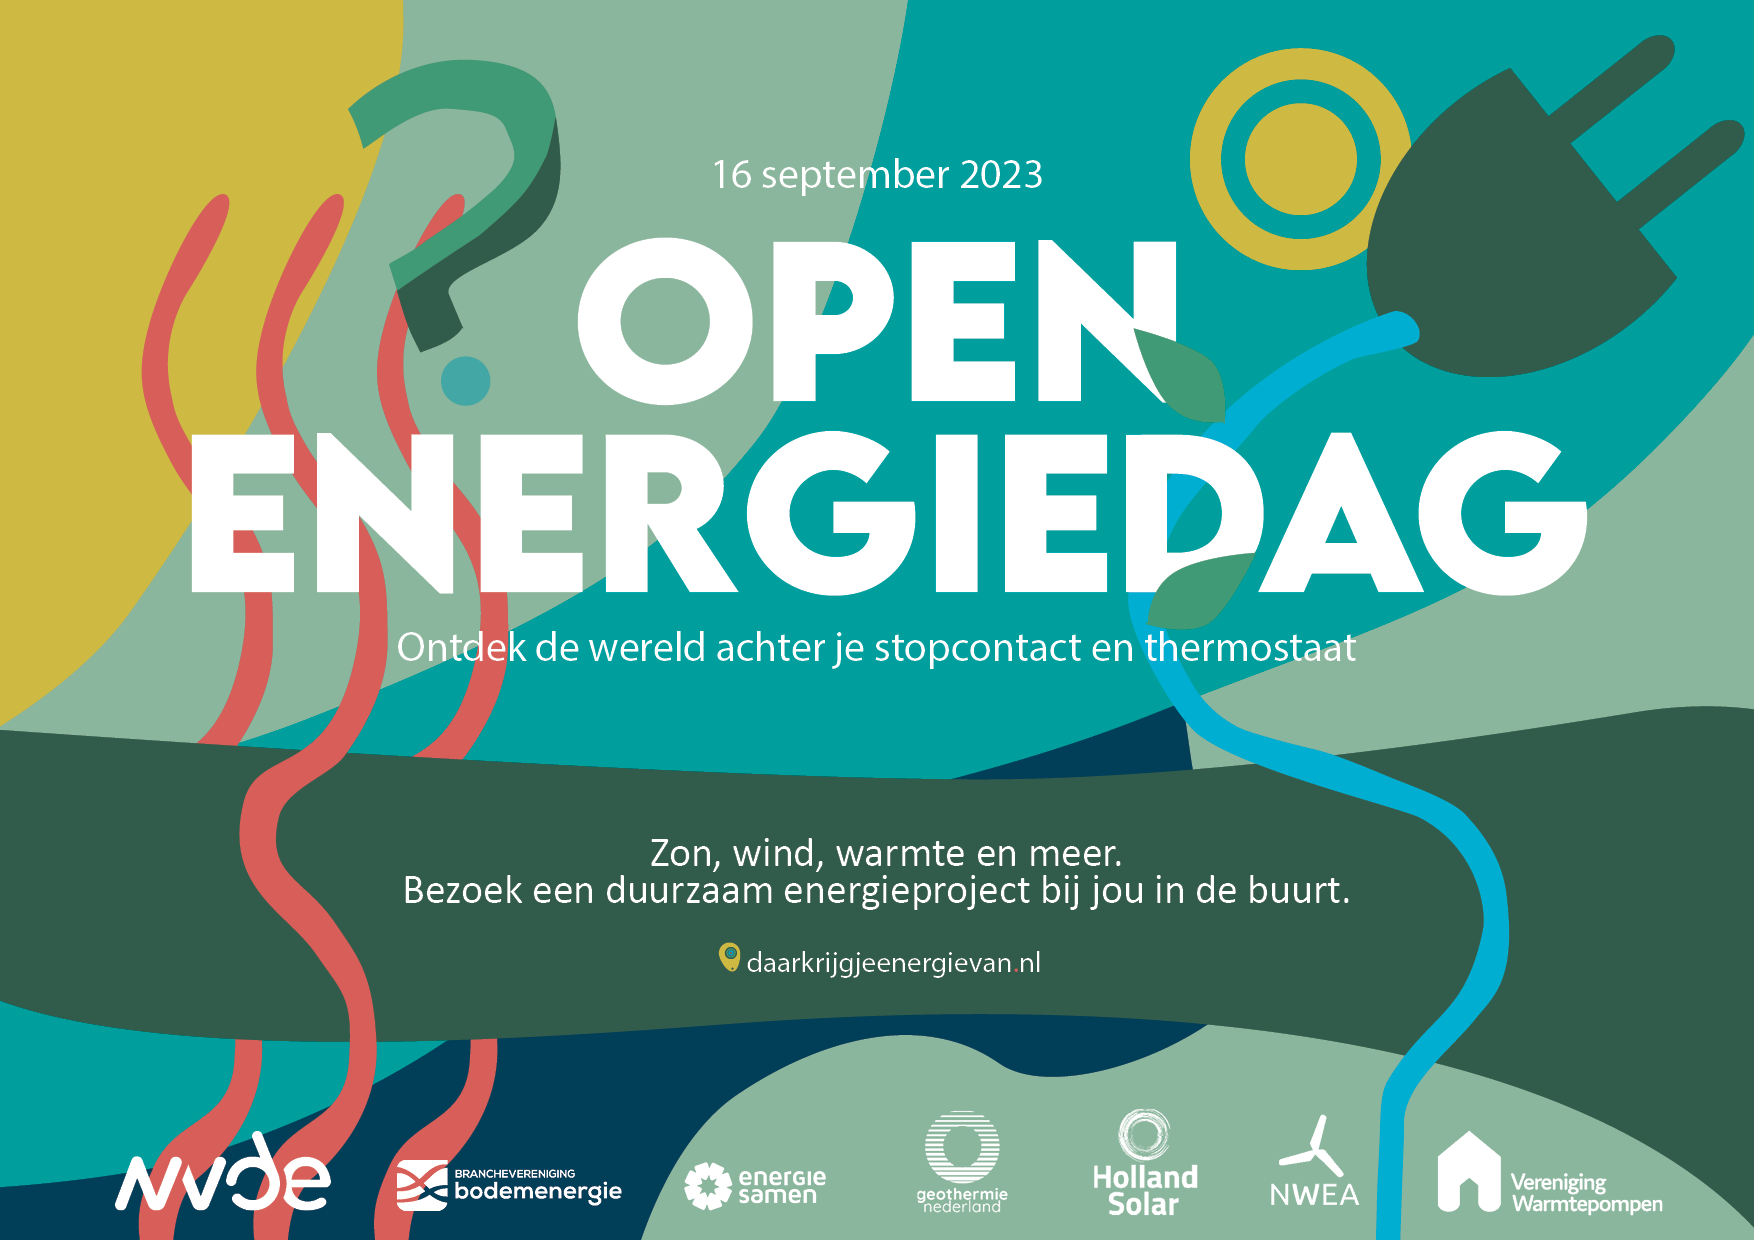 Open energiedag 16 september